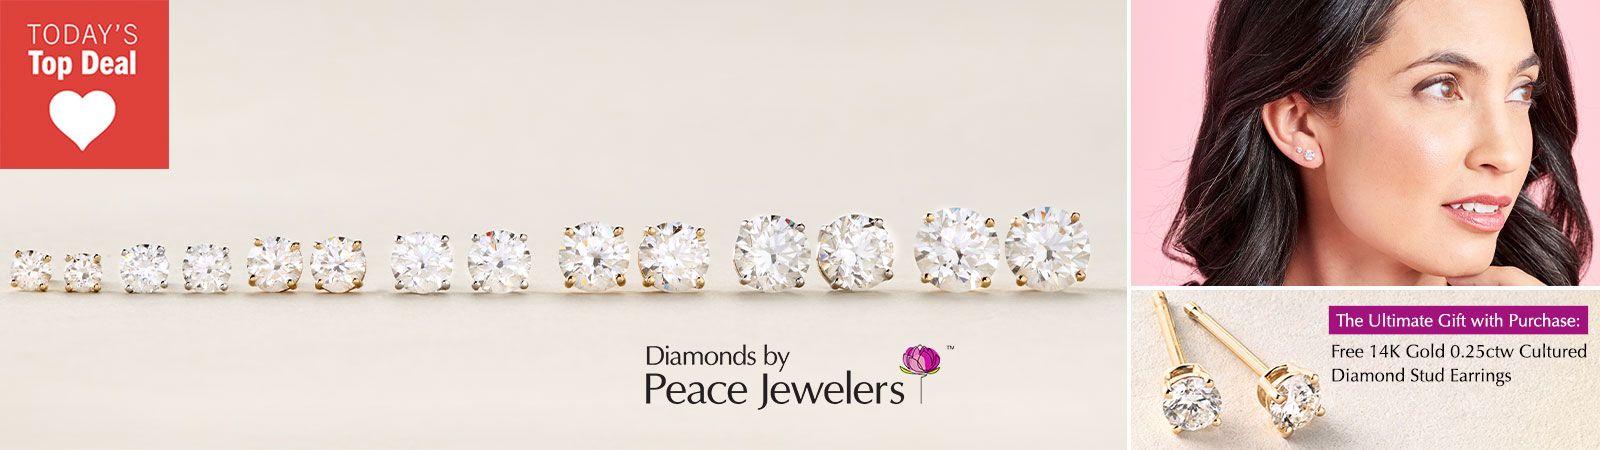 210-215 Peace Jewelers 14K Gold Choice of Carat Weight Cultured Diamond Stud Earrings